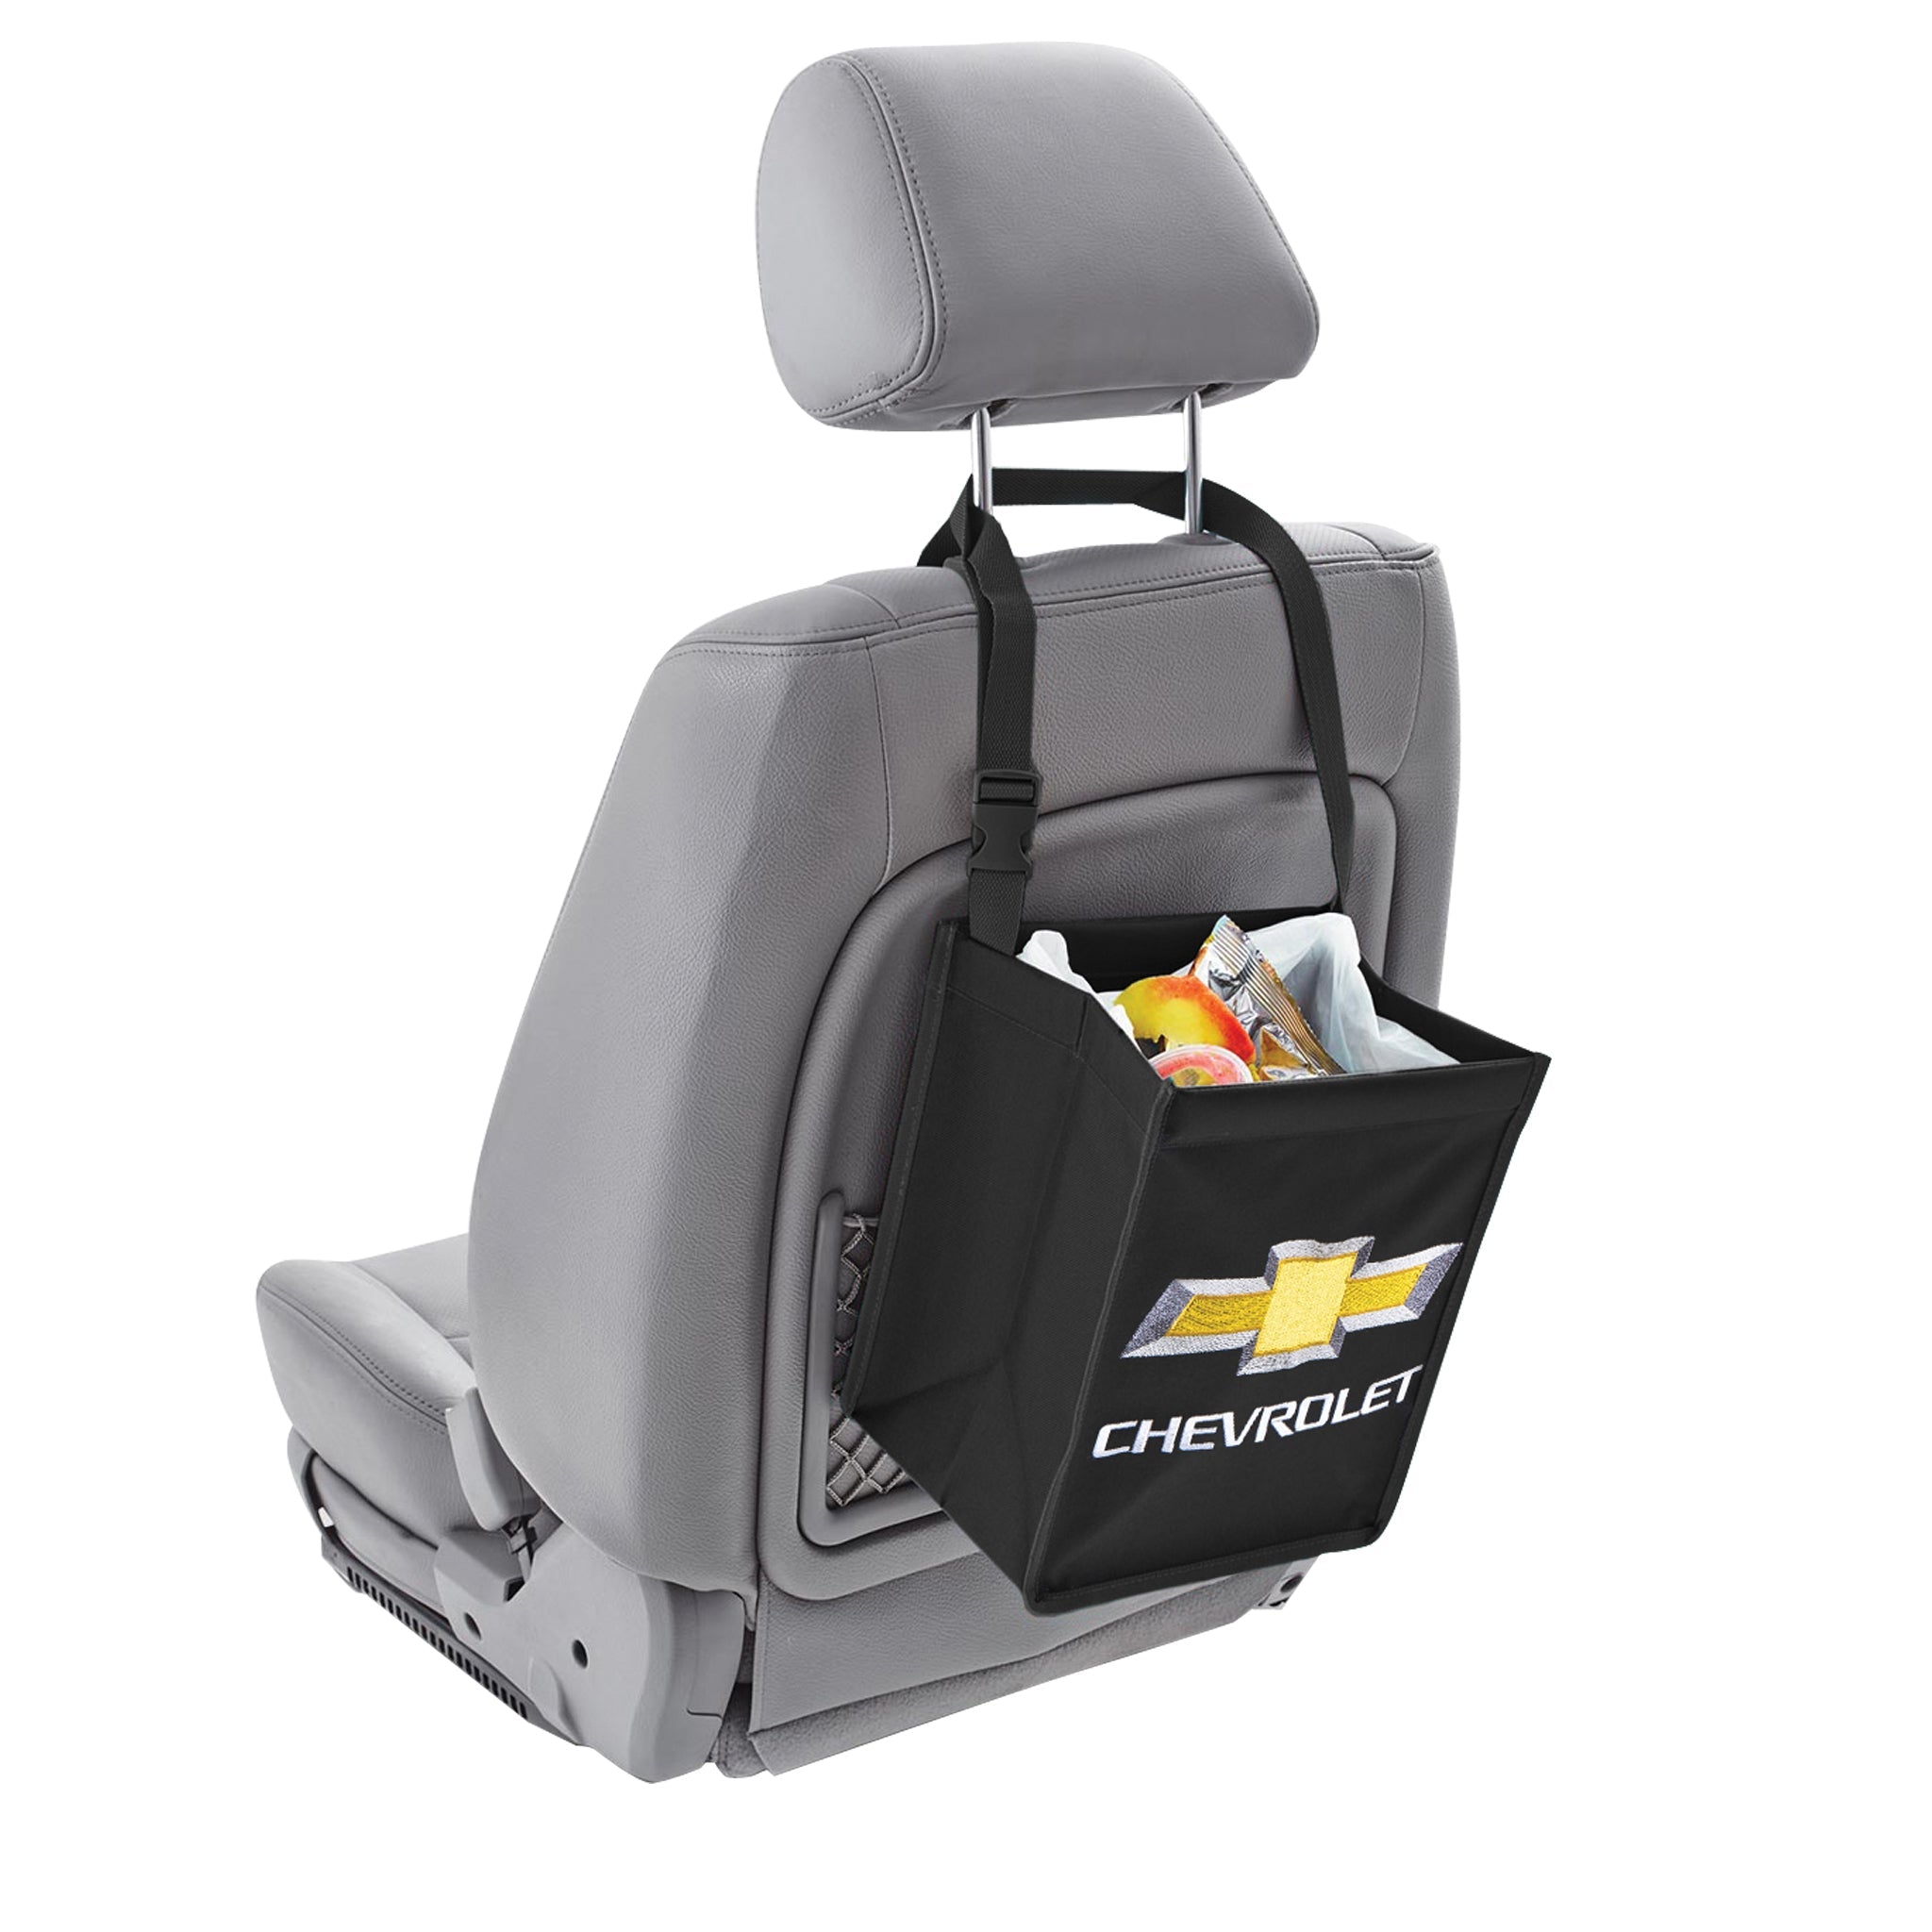 Chevrolet Over The Seat Vehicle Waste Bag with Adjustable Strap - Smart Design® 2